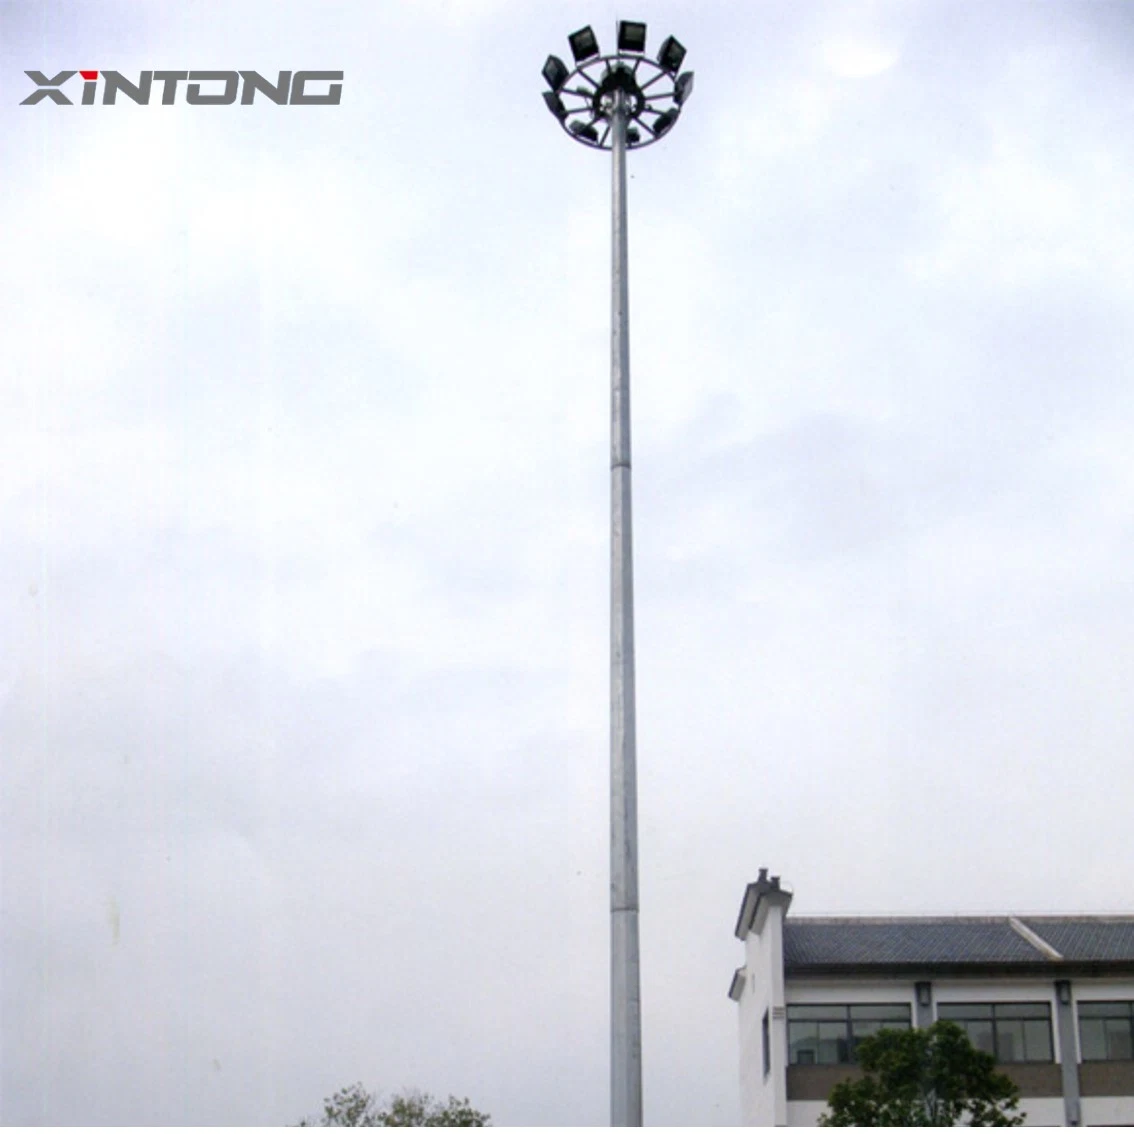 Xintong Portable City Road High Mast Traffic Light